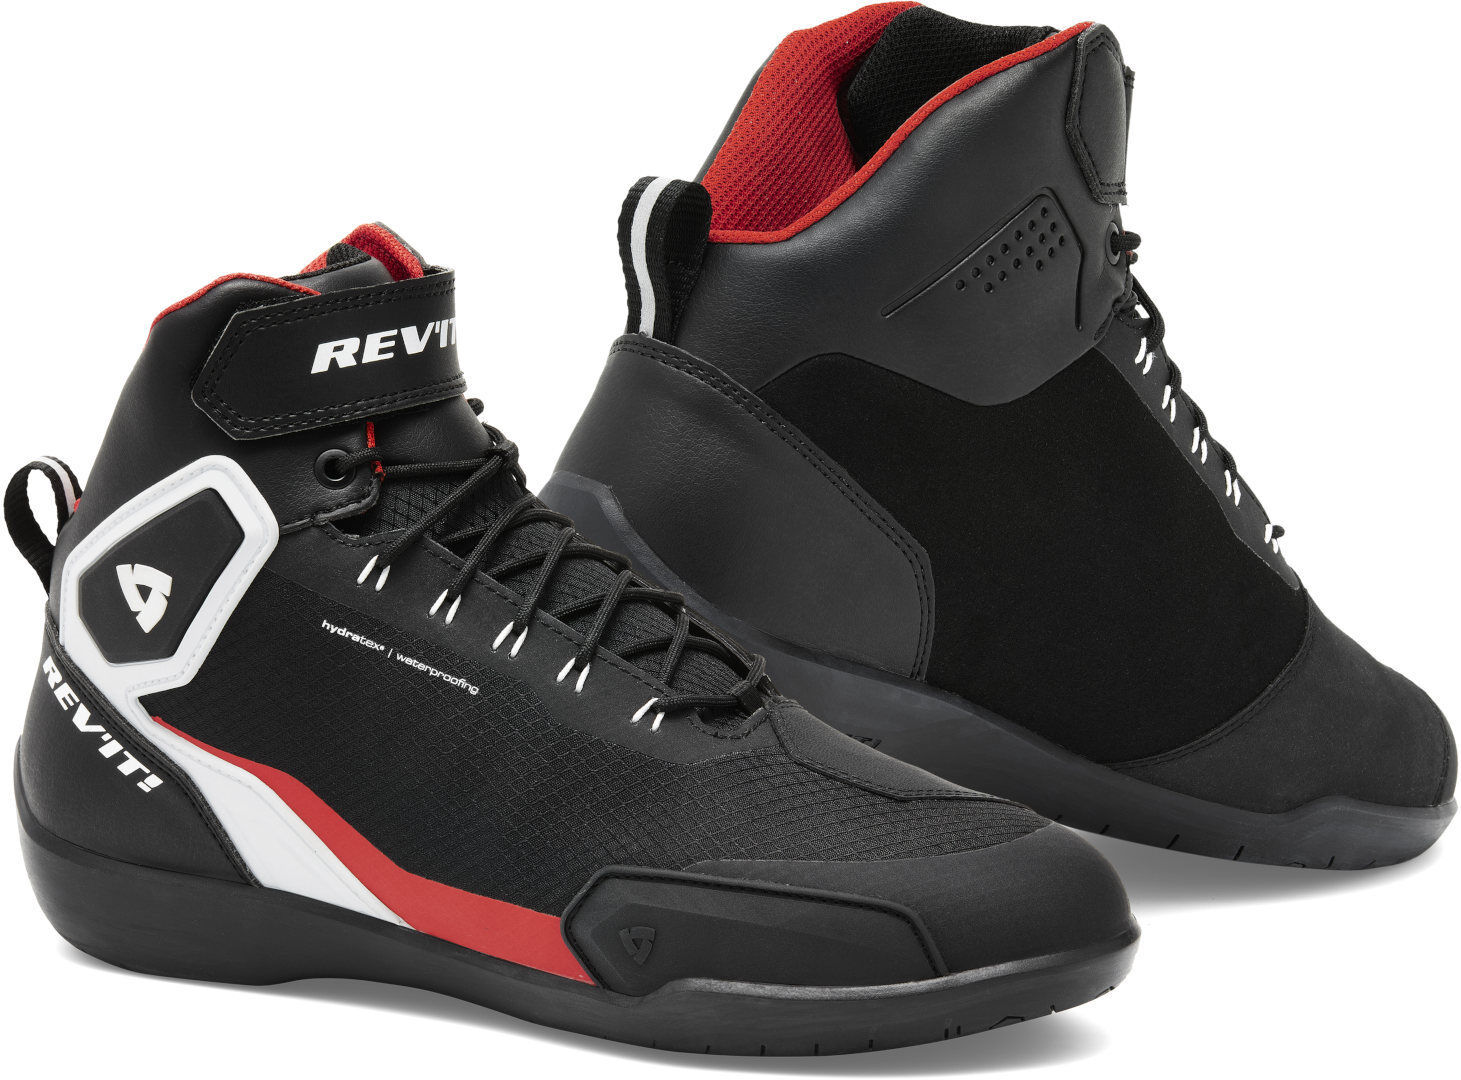 Revit G-Force H2O Zapatos impermeables para motocicletas - Negro Blanco Rojo (43)